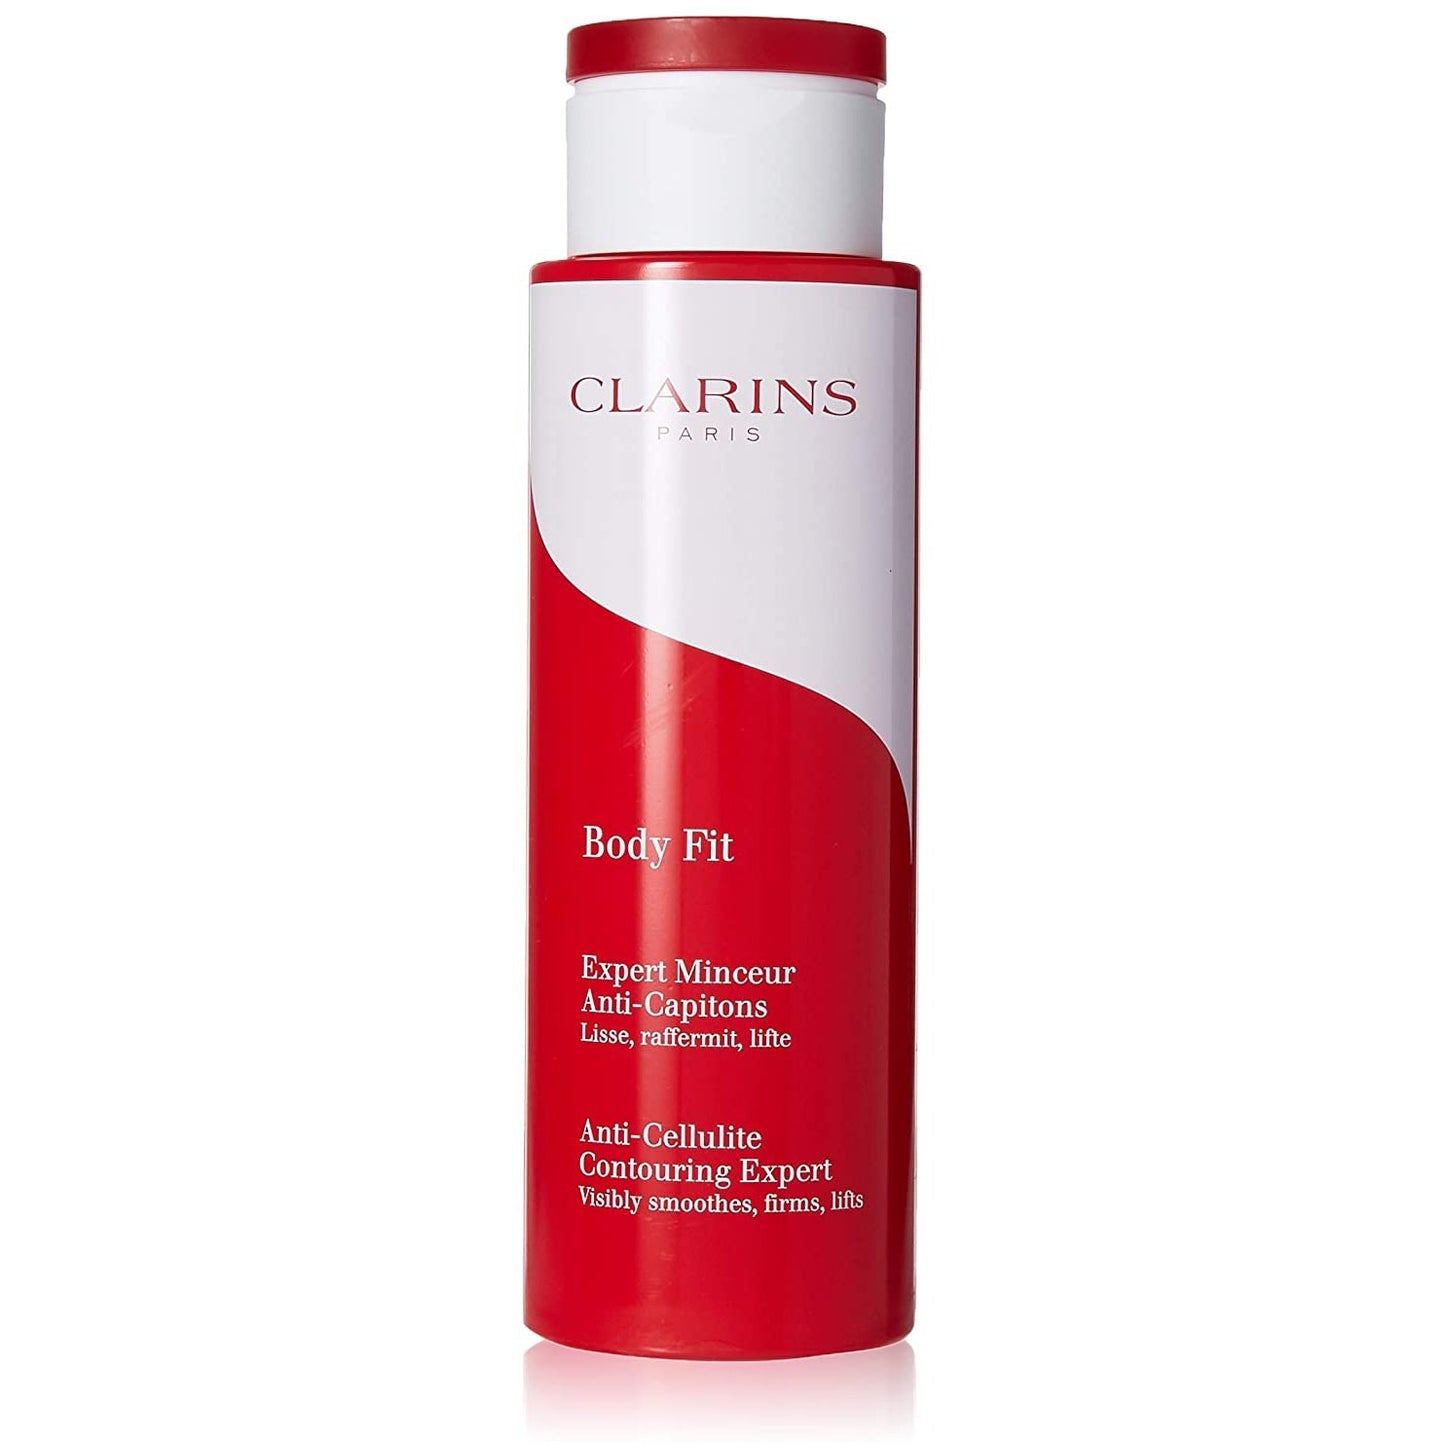 Clarins Body Fit Expert Minceur Anti-Cellulite 200 ml / 6.9 oz